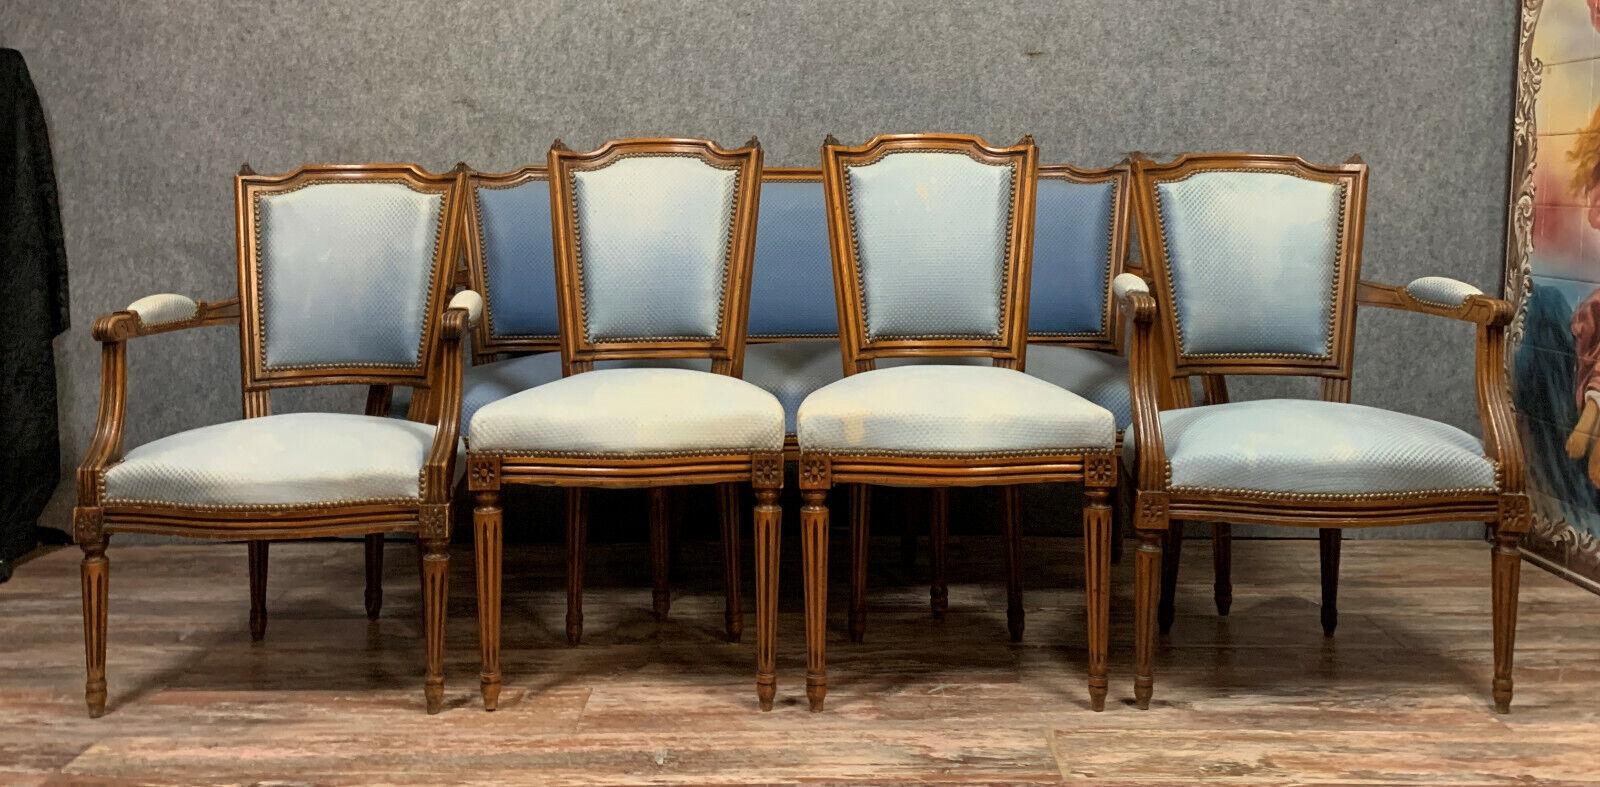 Exquisite Louis XVI Salon Furniture Set in Cherry Wood circa 1900s -1X13 4